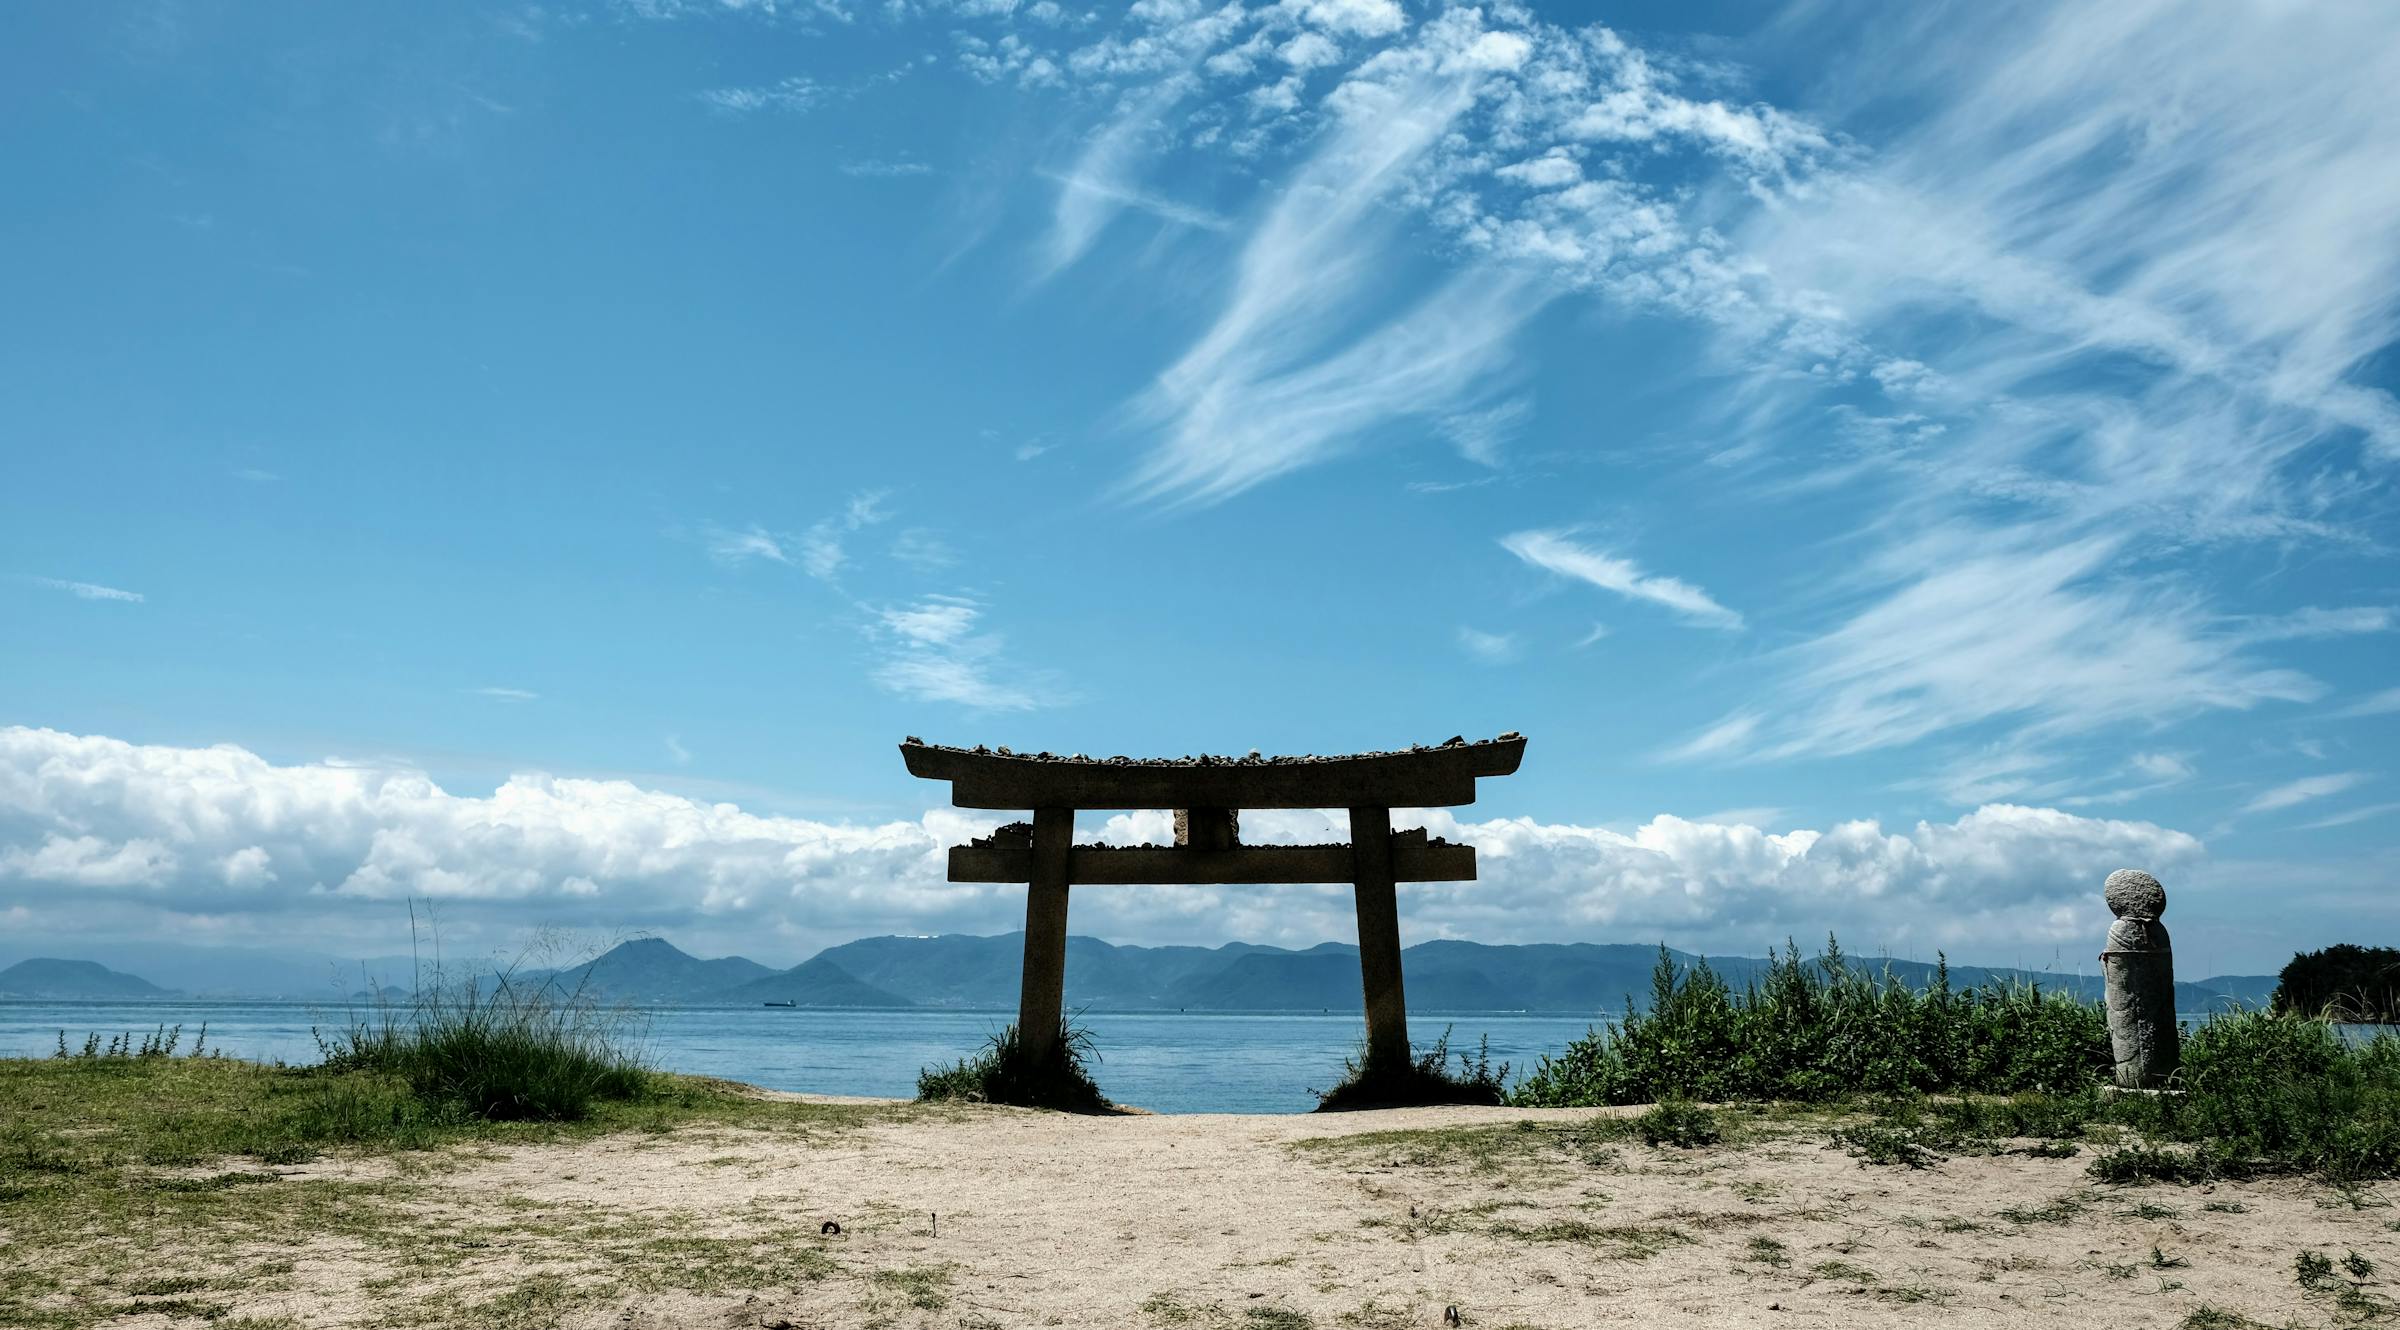 Torii Gate in Japan near the ocean with islands